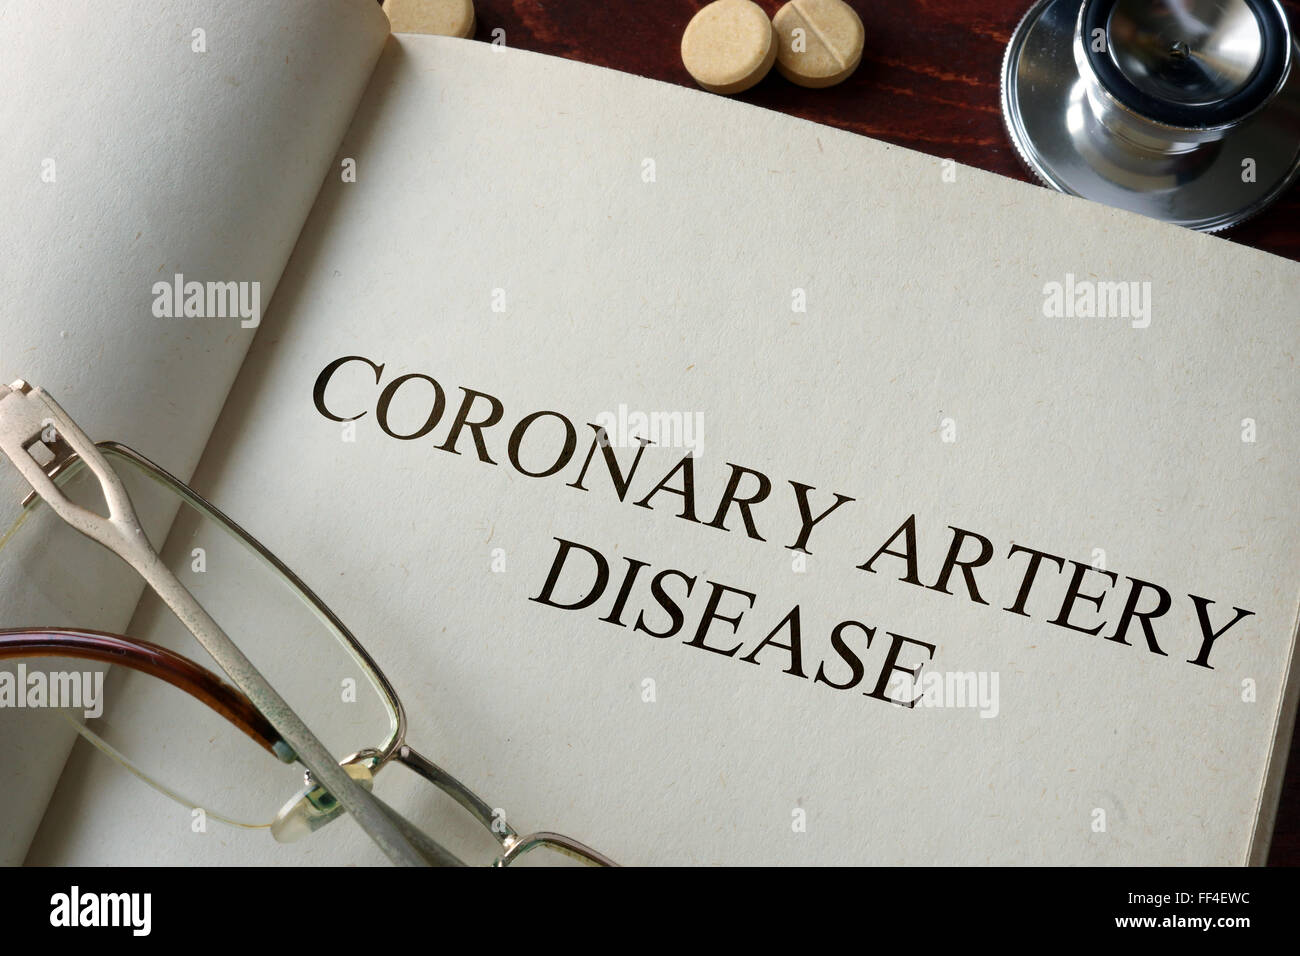 Book with diagnosis coronary artery disease and pills. Medical concept. Stock Photo